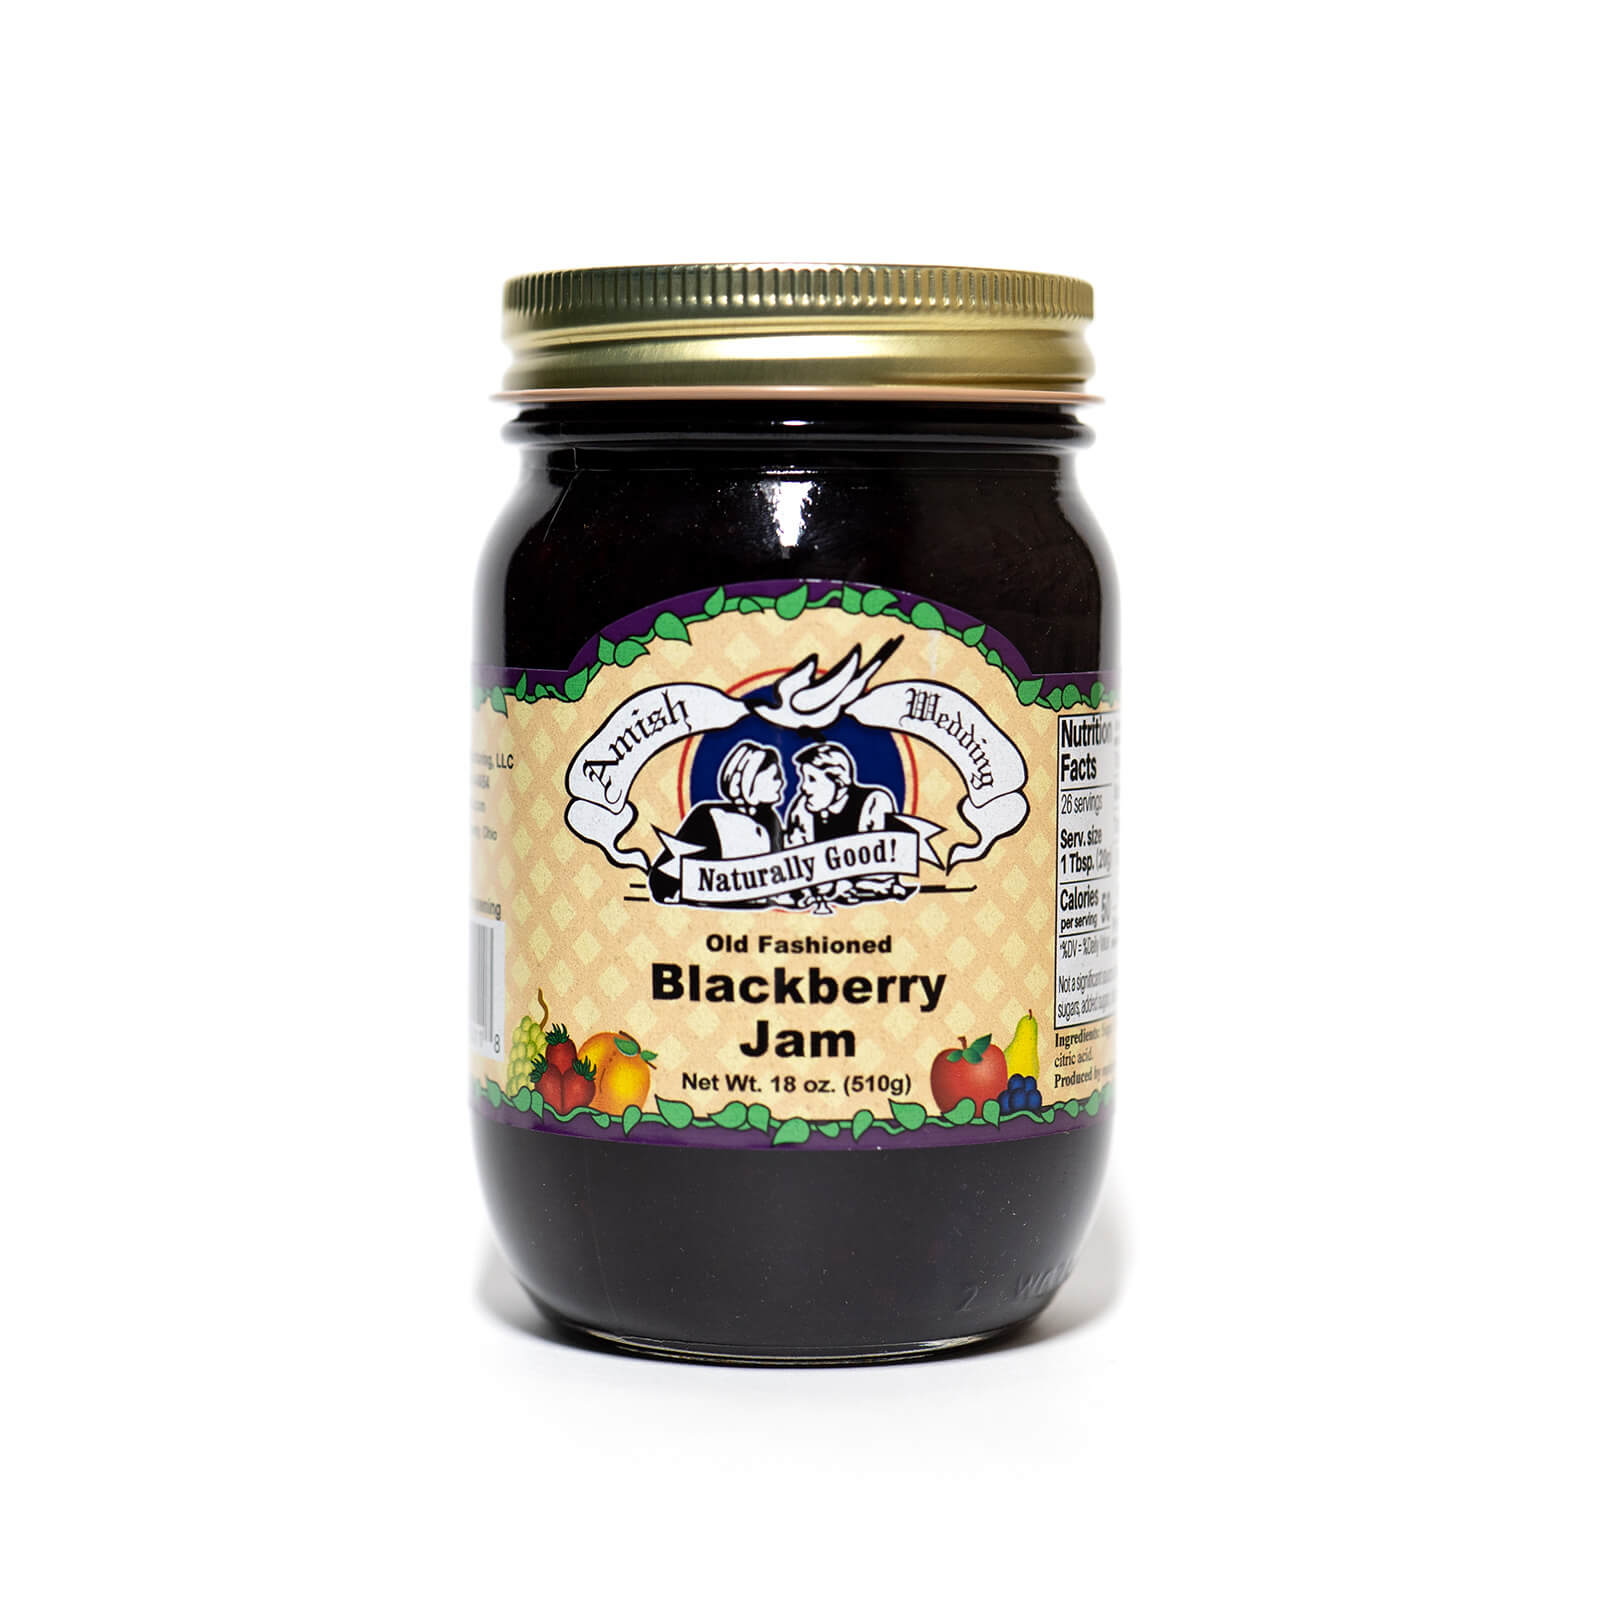 Old Fashioned Blackberry Jam - Amish Wedding - Single Jar - Front Label